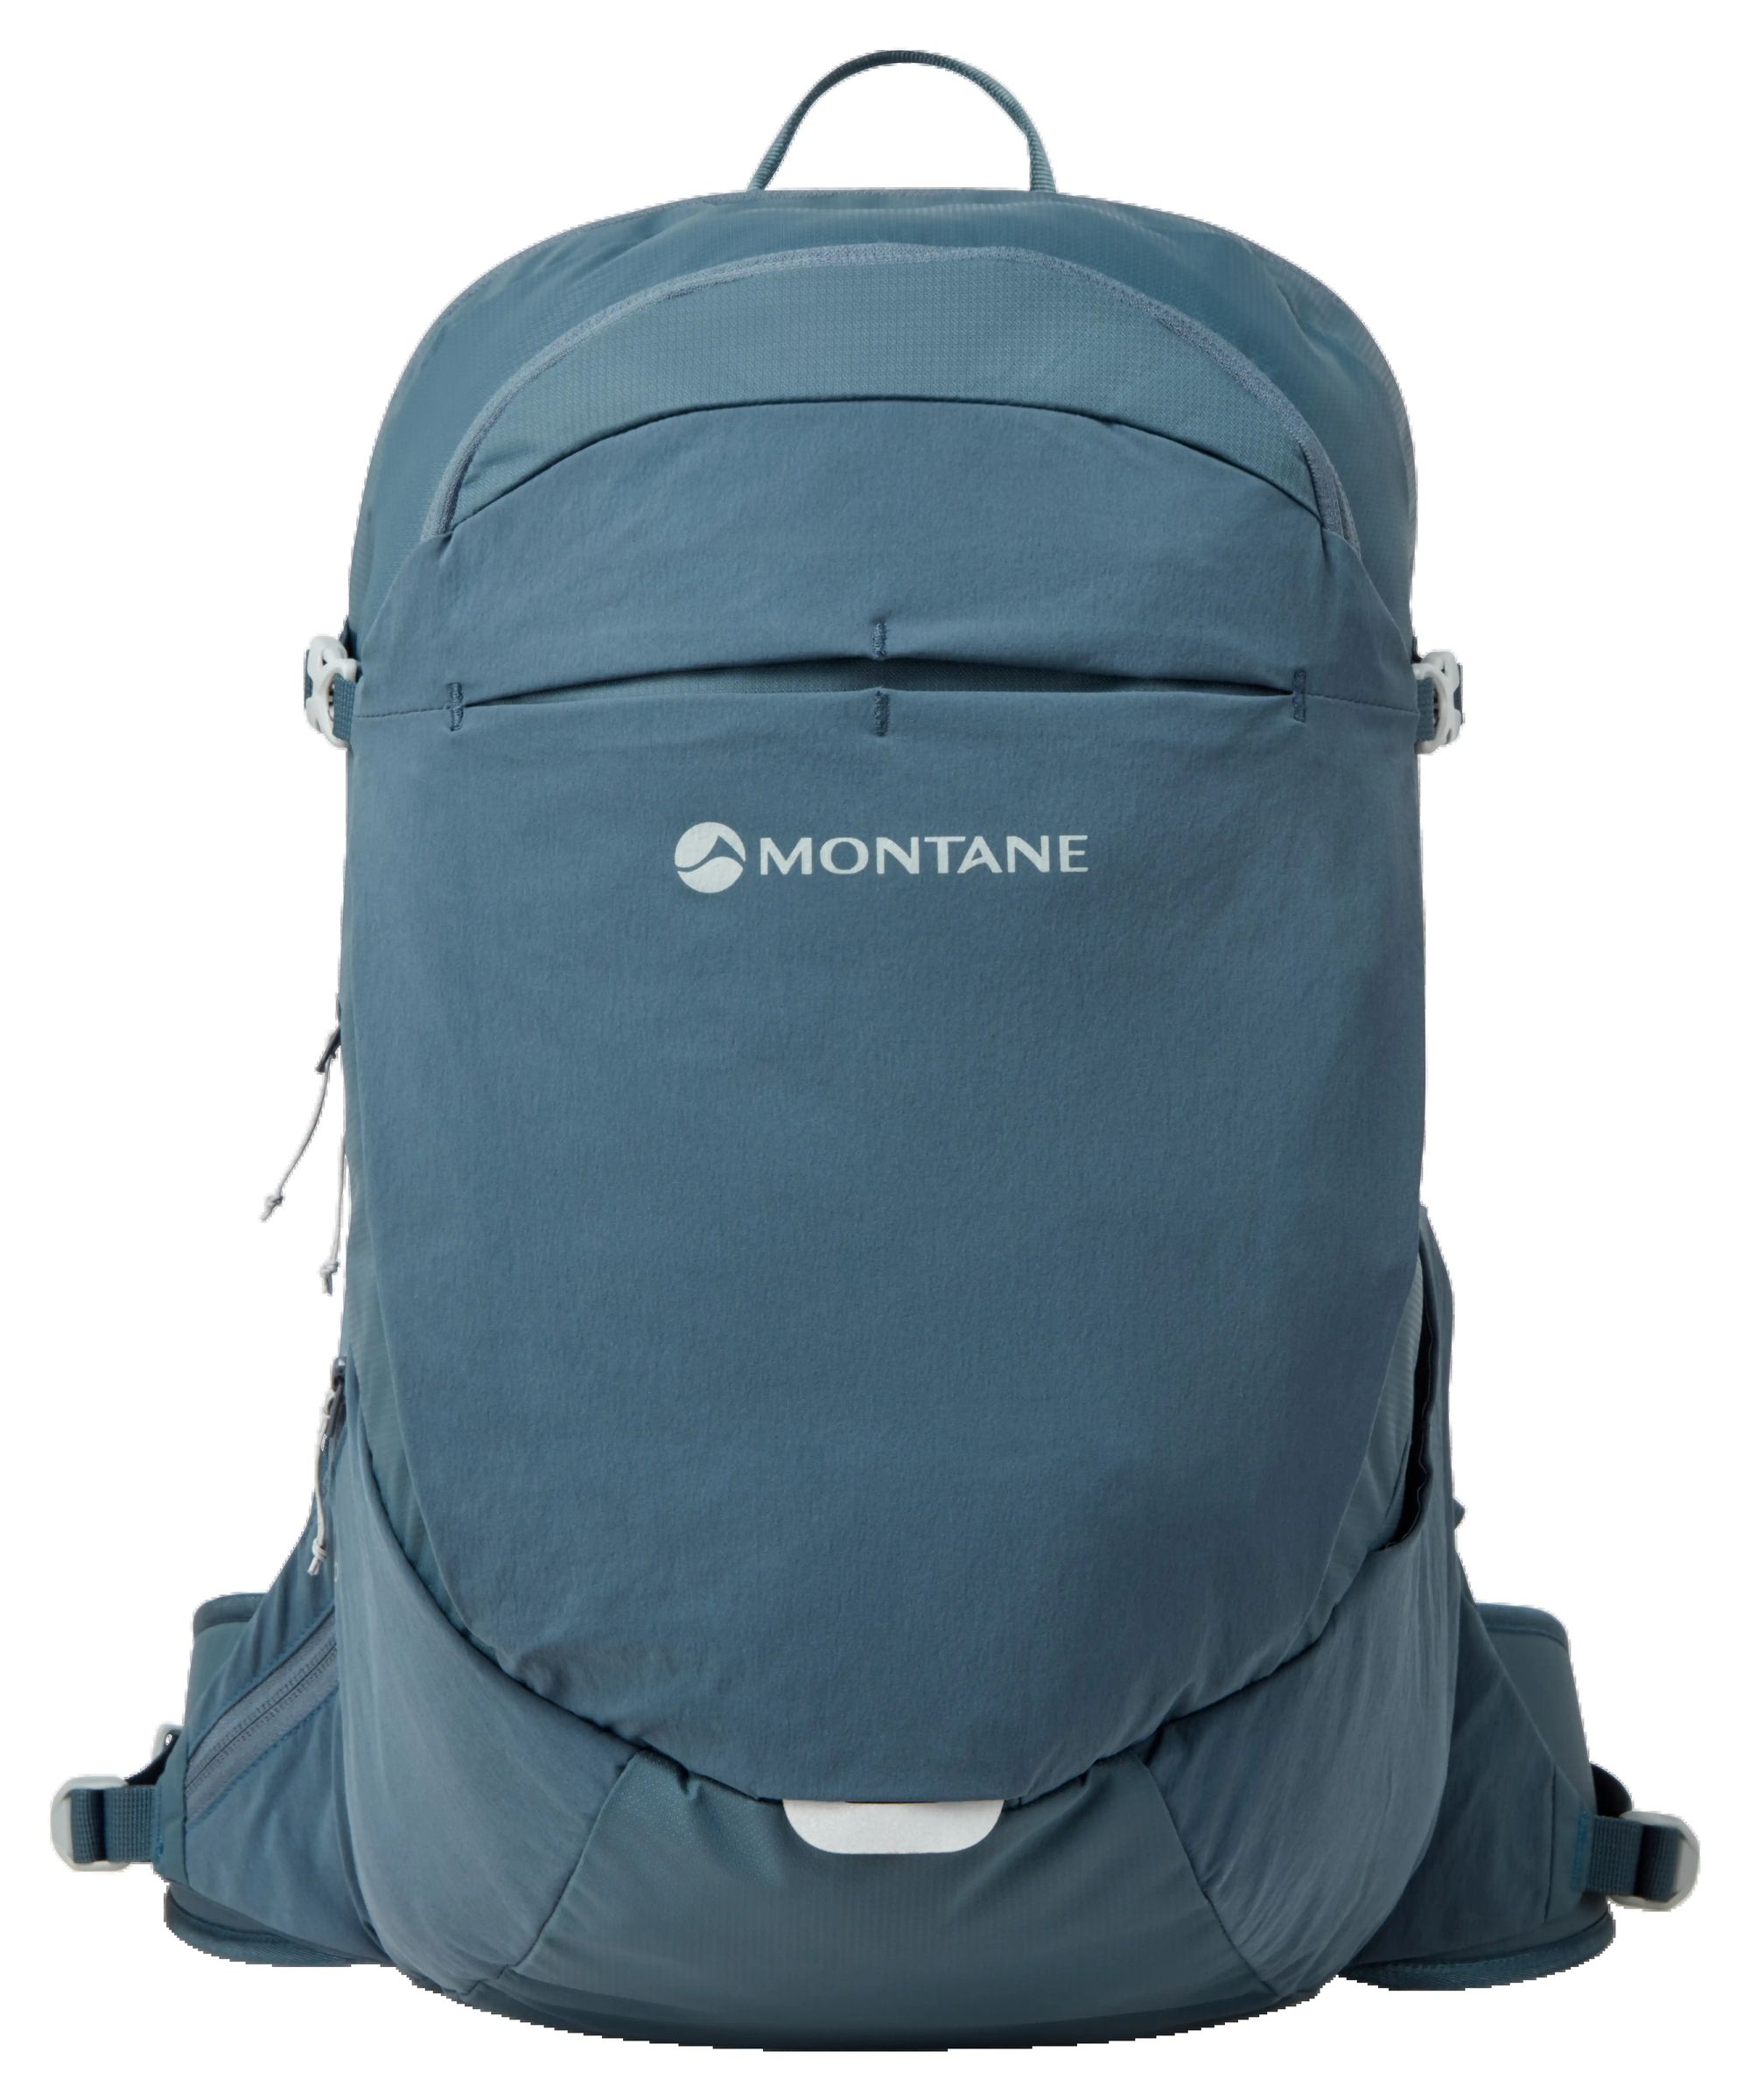 Montane ORBITON 25-28-ASTRO BLUE-ONE SIZE batoh modrý